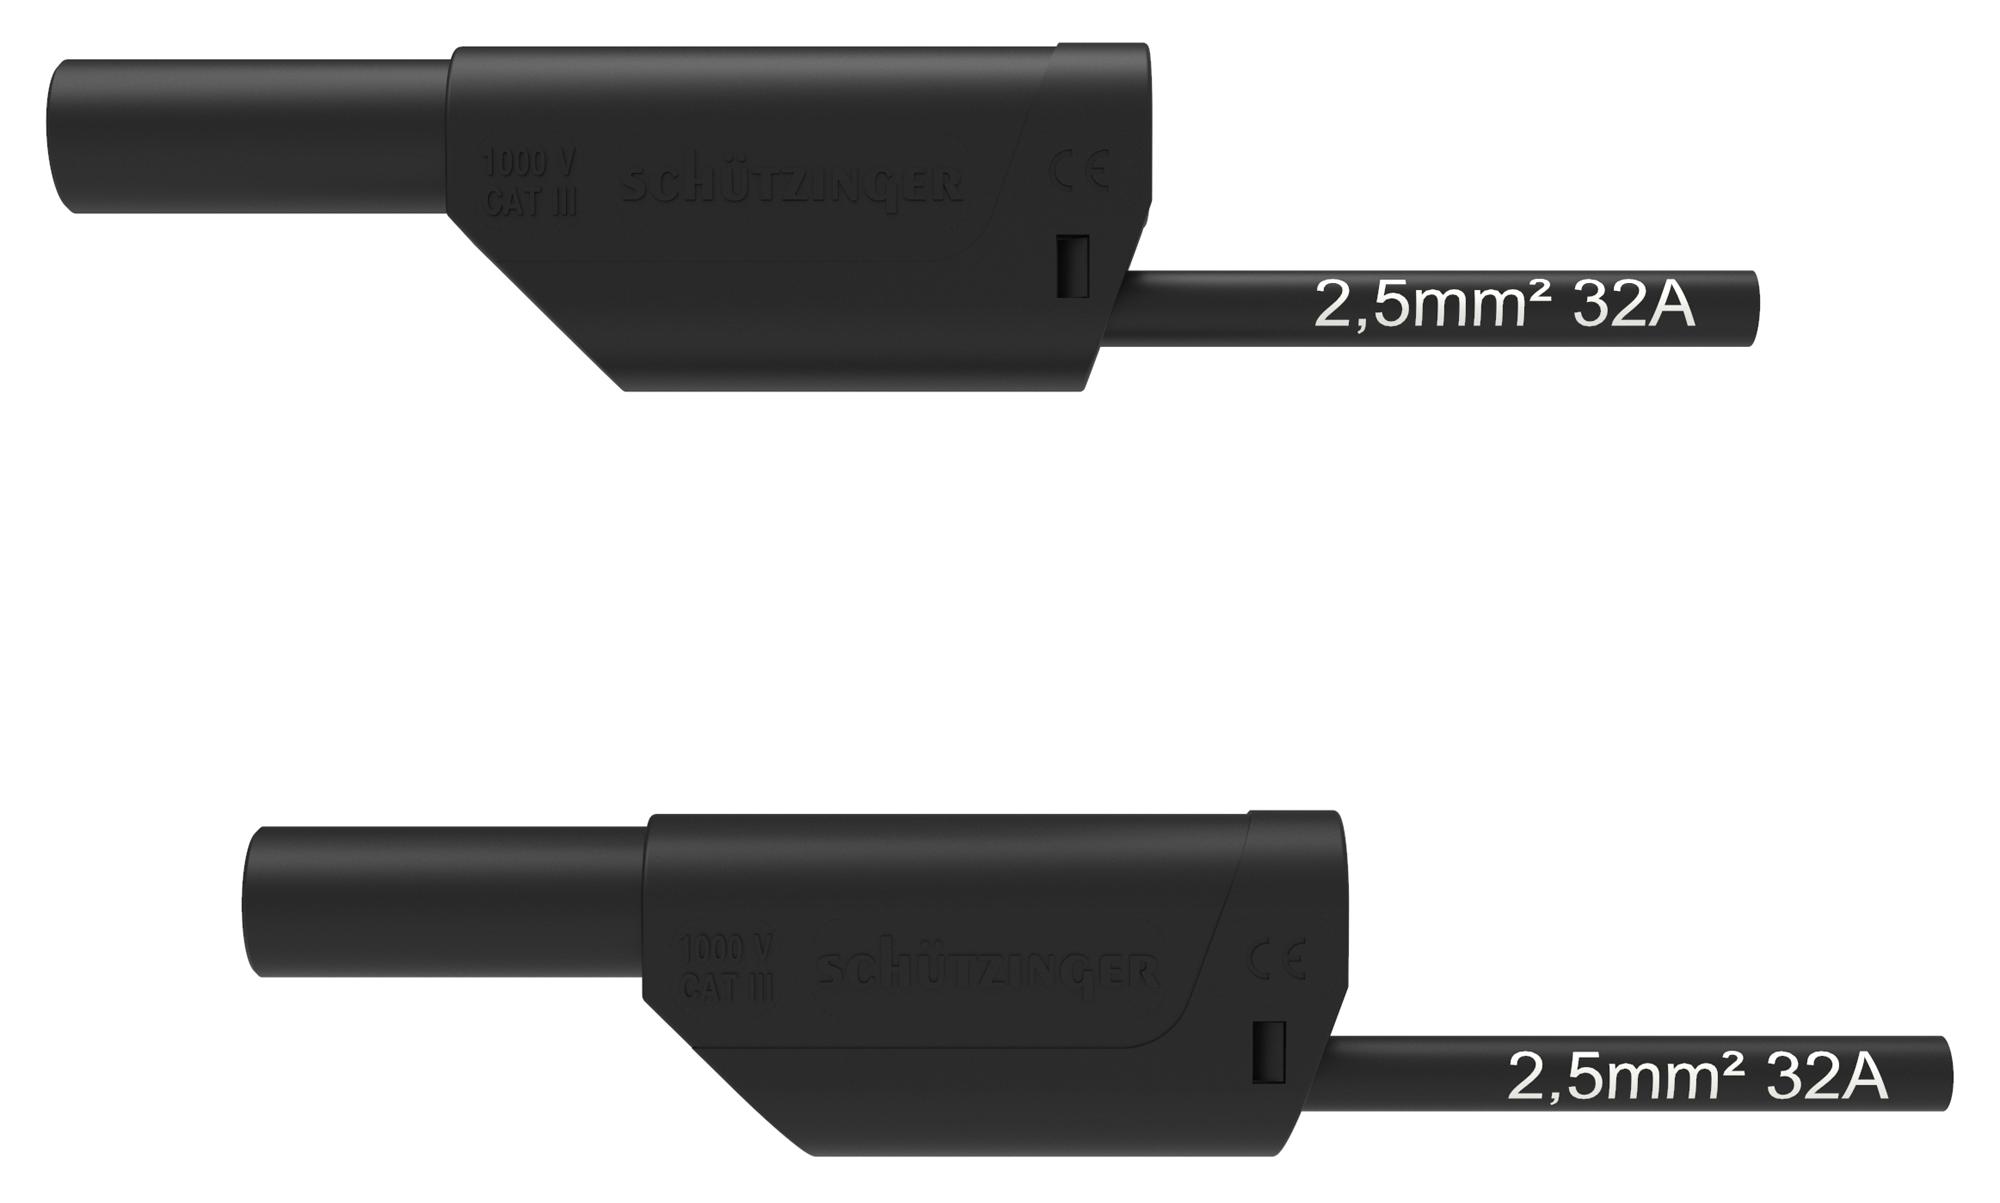 Schutzinger Di Vsfk 8700 / 2.5 / 200 / Sw 4mm Banana Plug-Sq, Shrouded, Black, 2M